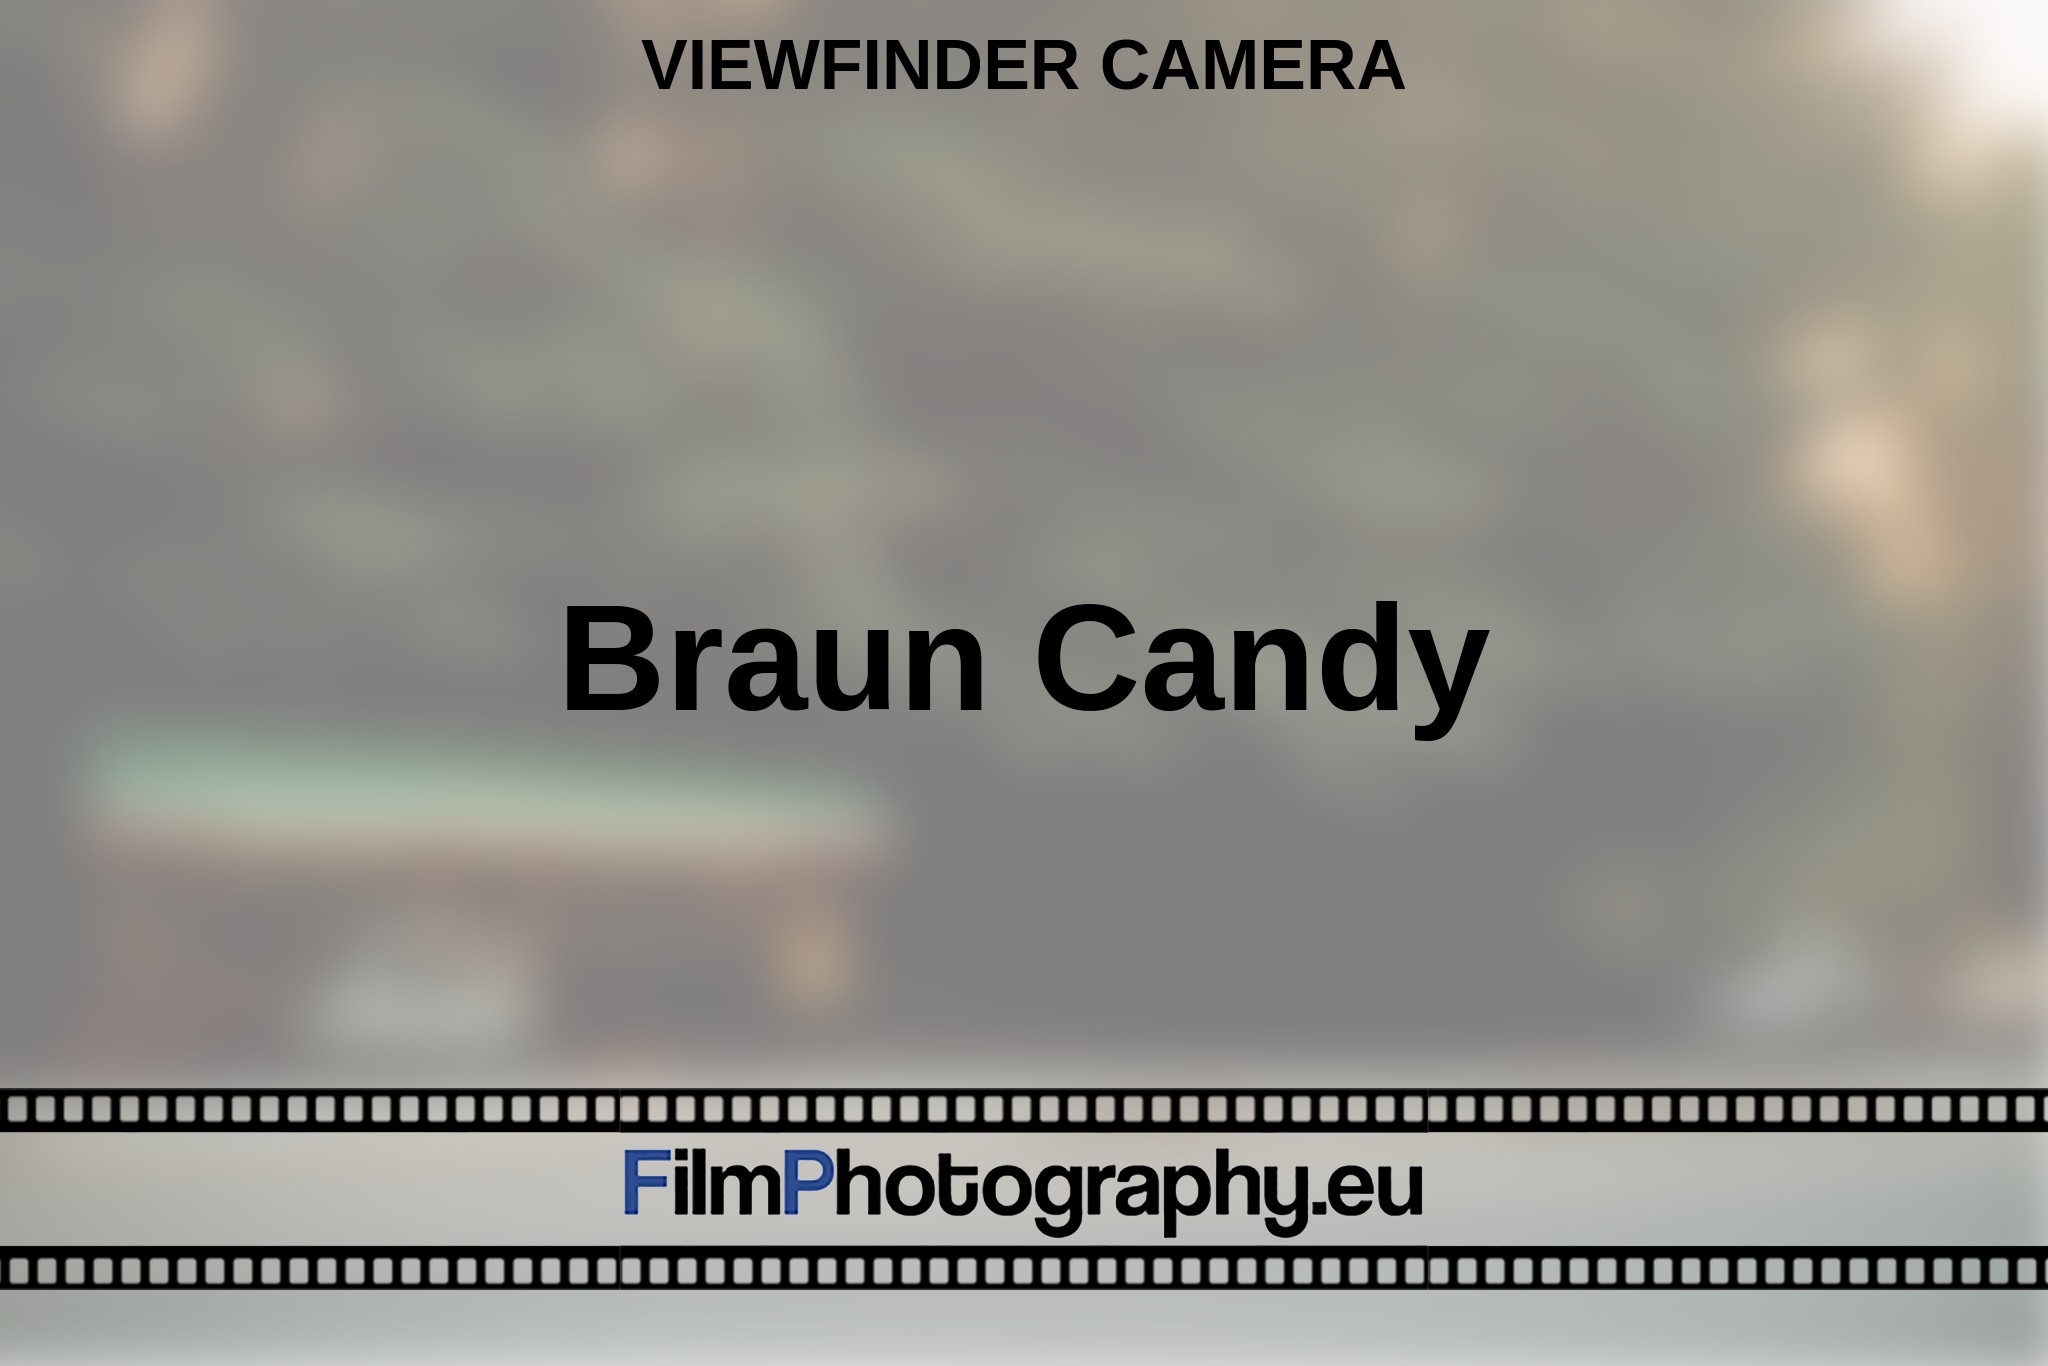 braun-candy-viewfinder-camera-en-bnv.jpg